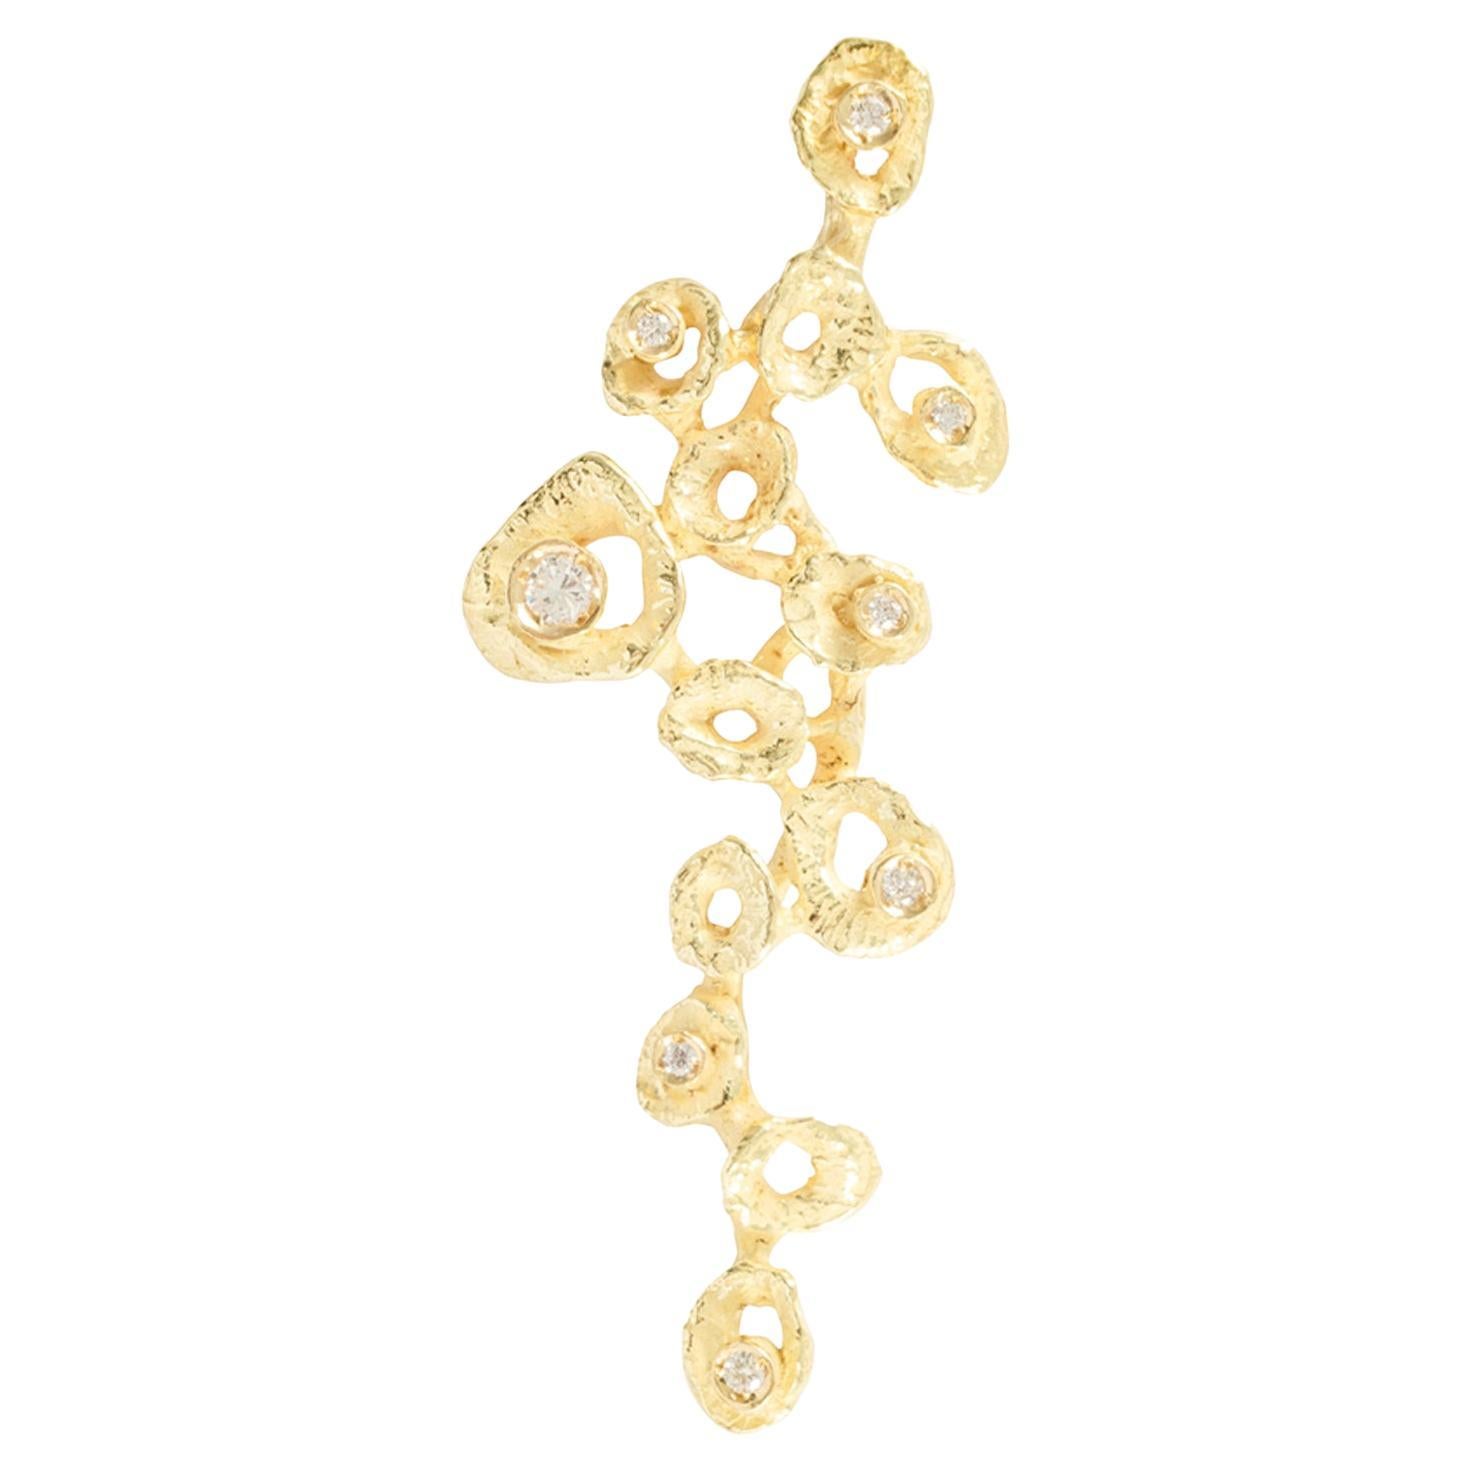 Sacchi "Bouquet" White Diamonds 18 Karat Yellow Gold Pendant Necklace